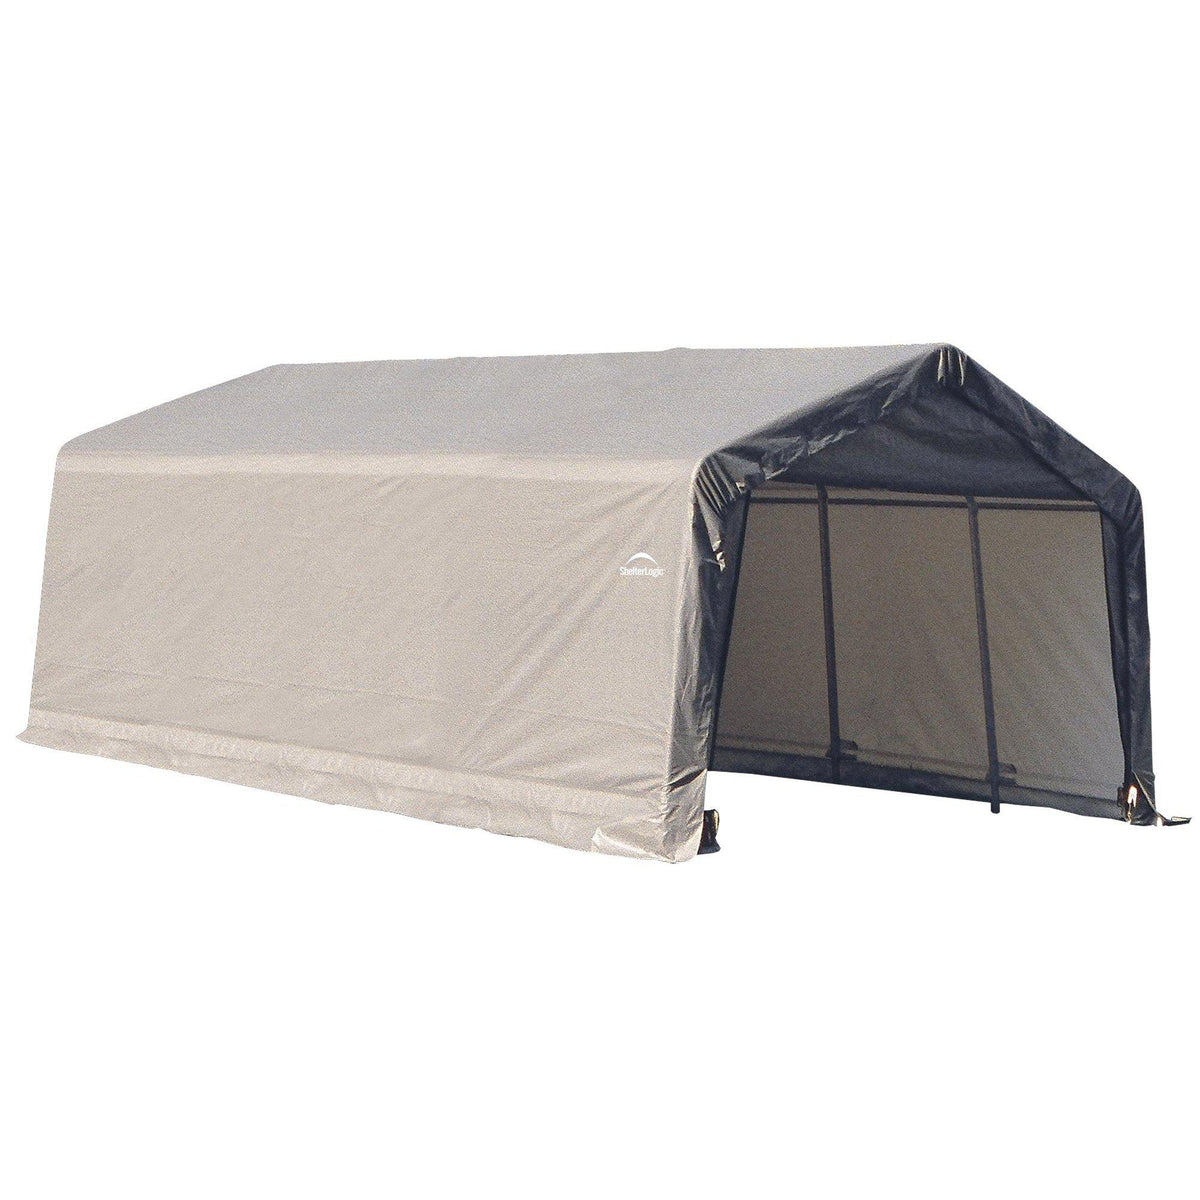 ShelterLogic 12 x 20 x 8 ft. Instant Garage Heavy Duty Canopy Carport